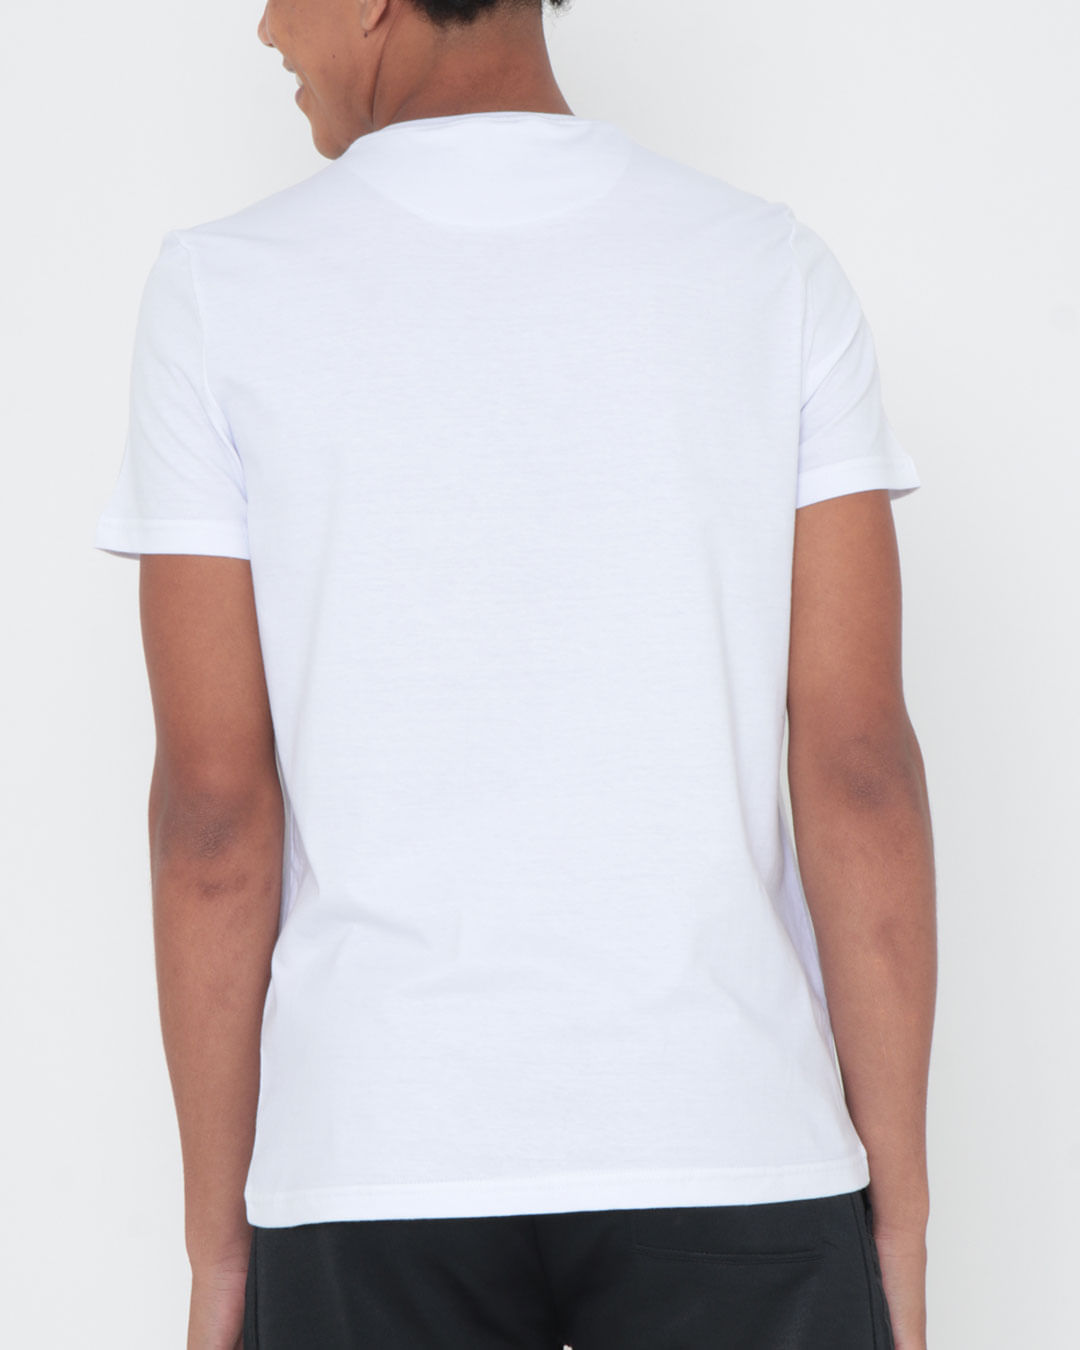 Camiseta-9507p145-Fashion---Branco